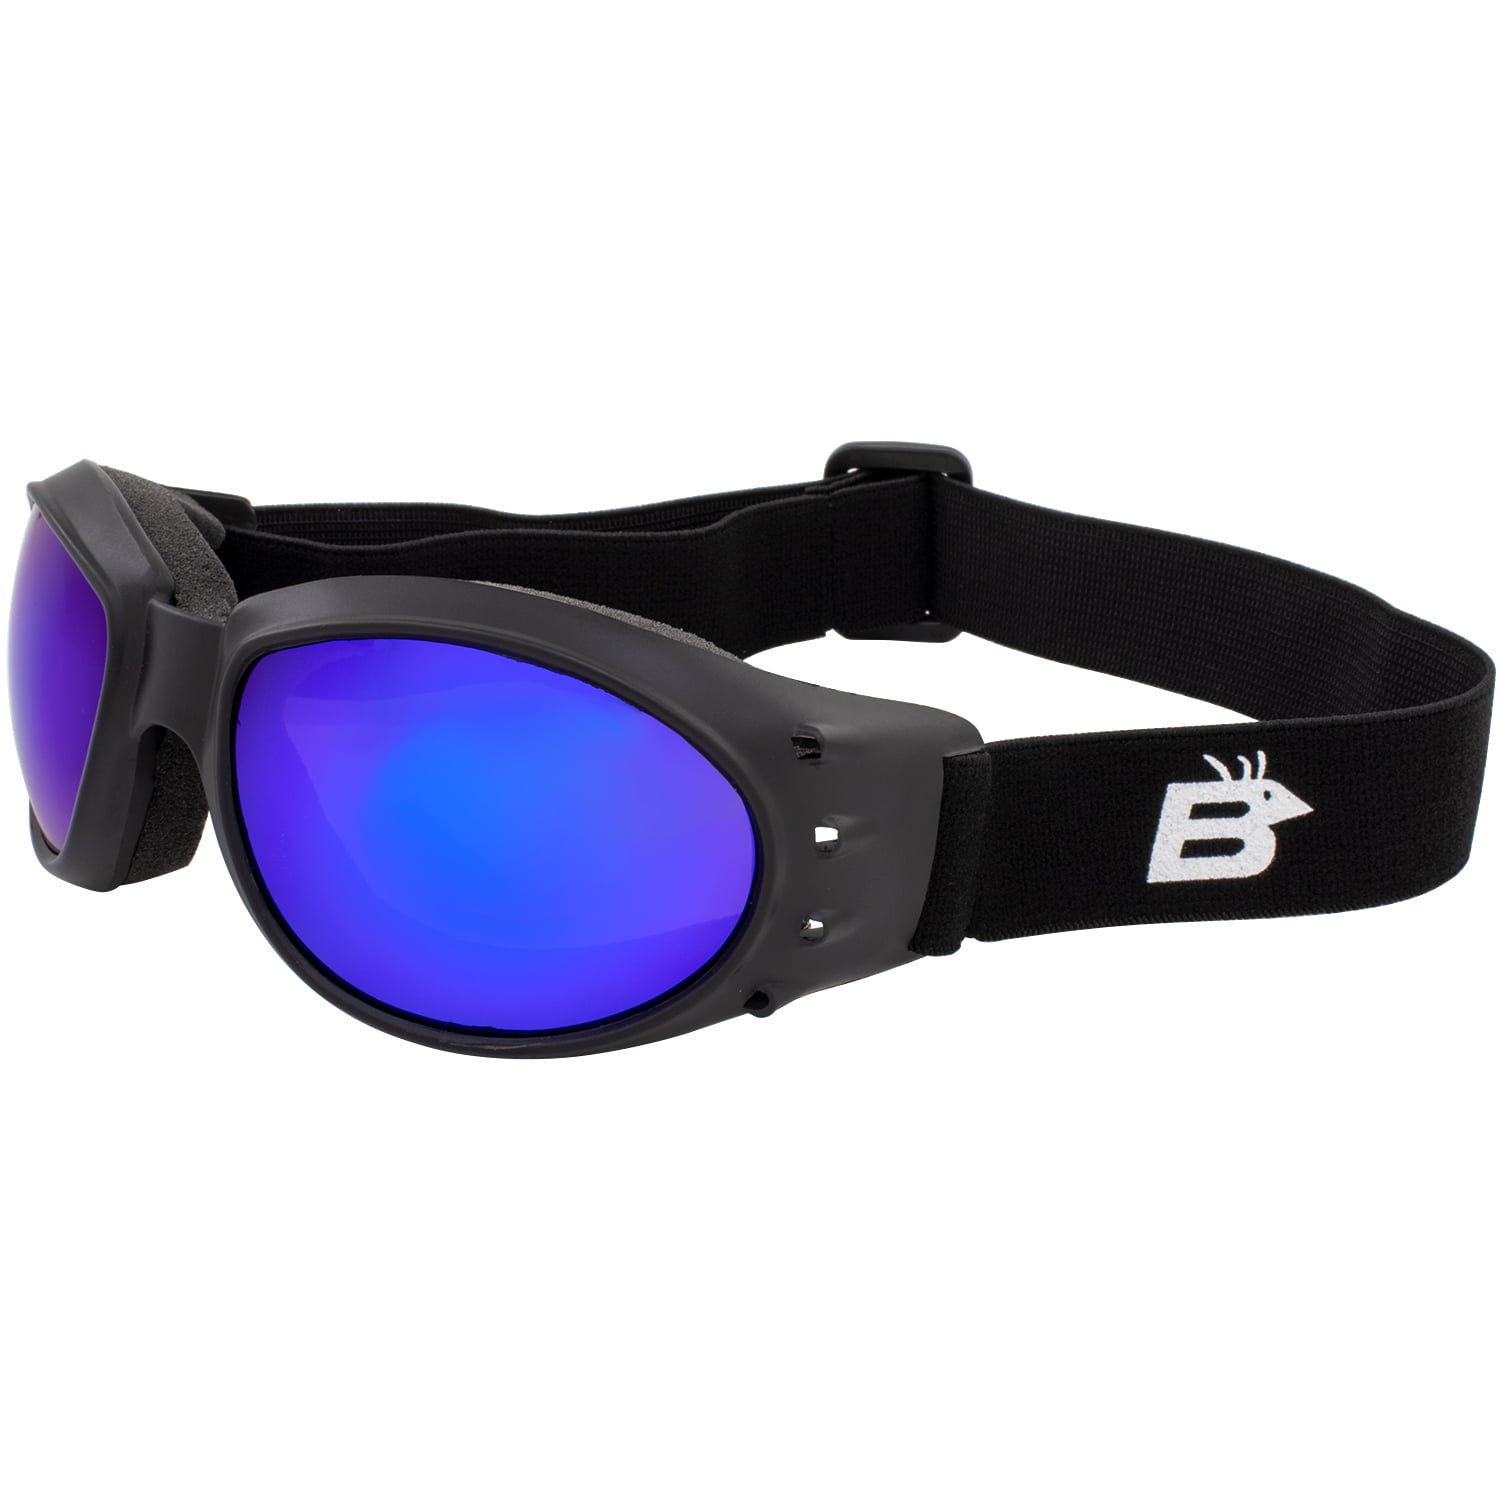 Birdz Eagle Matte Black Padded Sport Riding Goggle with ReflecTech Blue Mirror Lens 